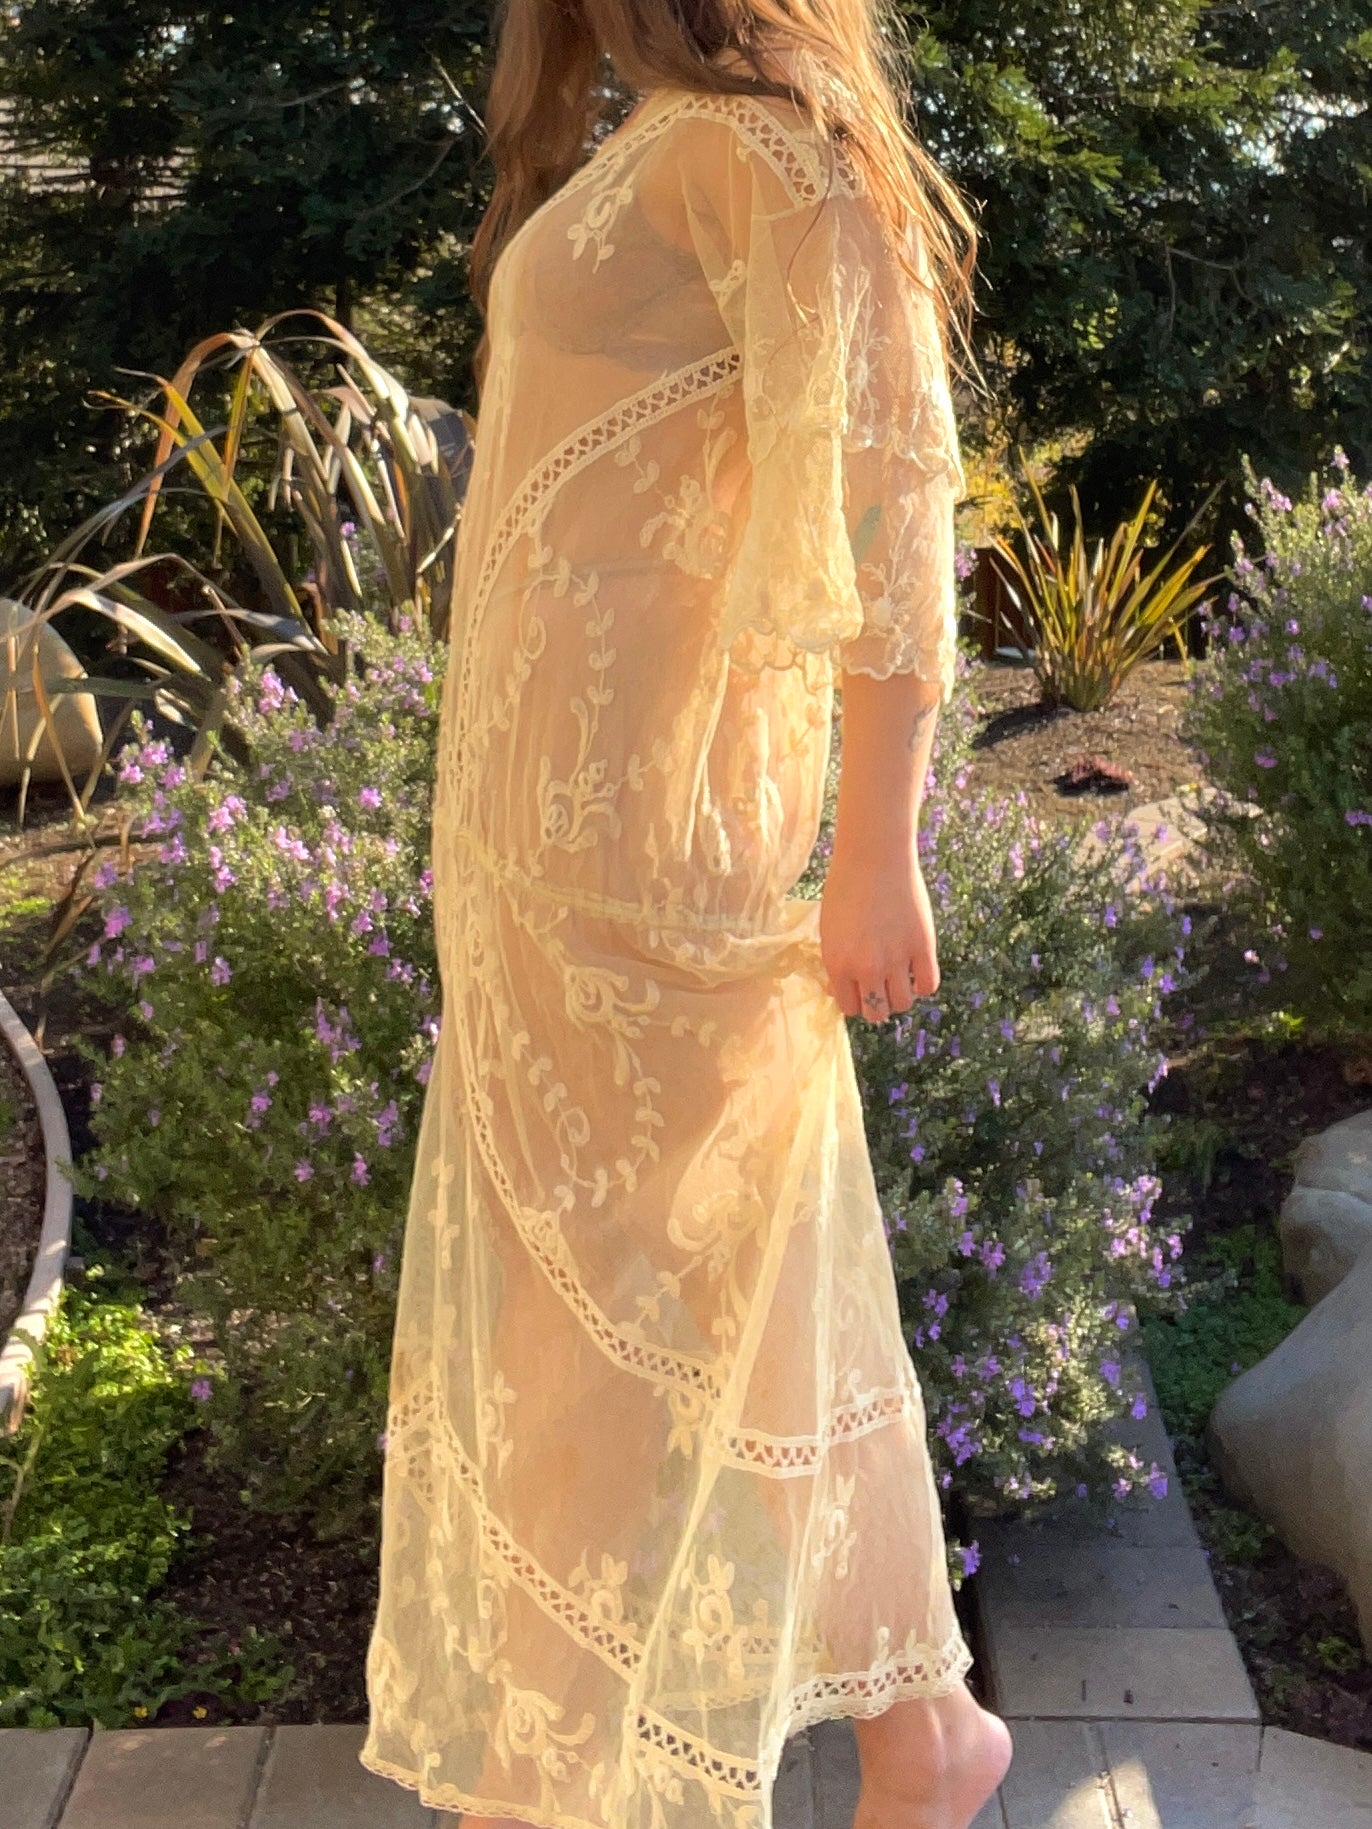 Late Edwardian Ecru Tambour Lace Gown